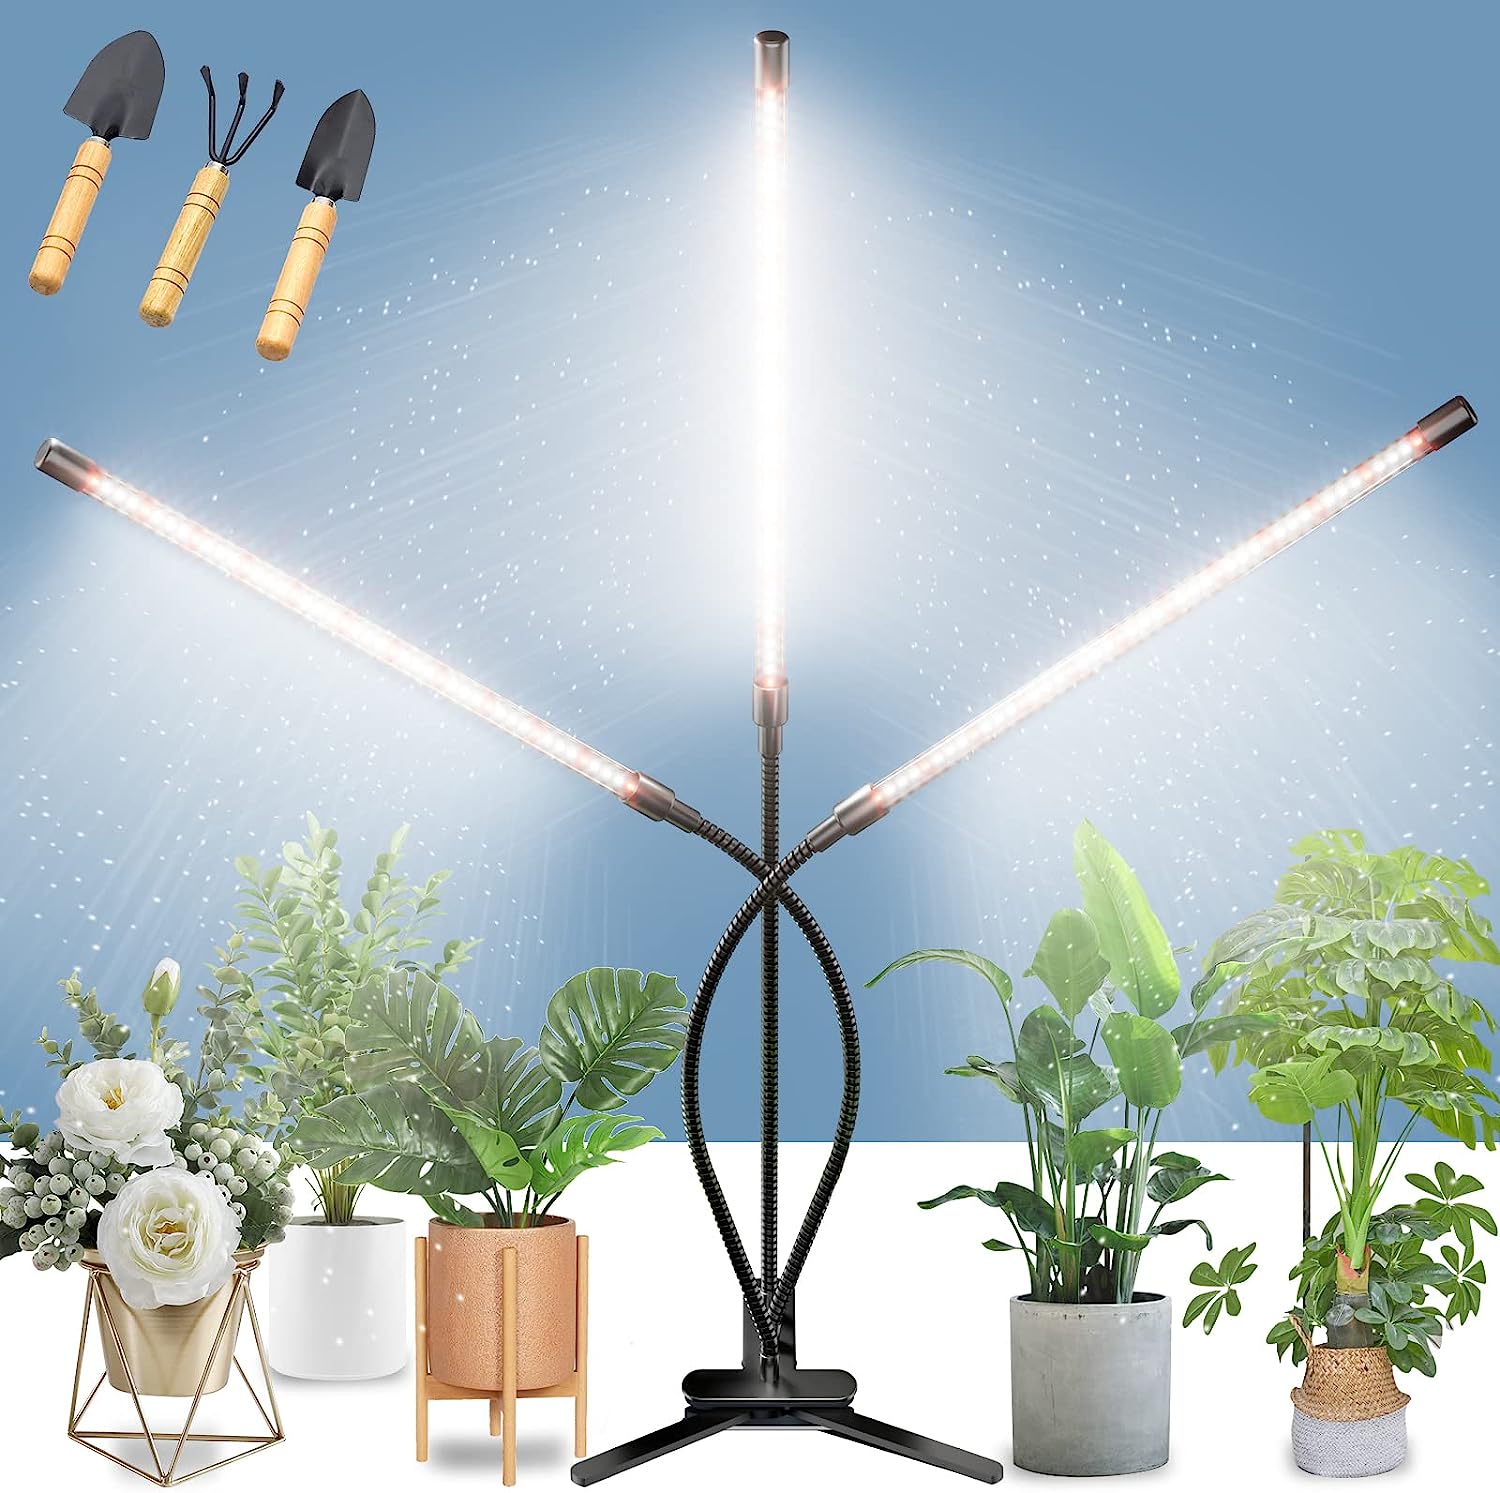 BAEDAOD Grow Lights for Indoor Plants, 6000K 135 LEDs [...]